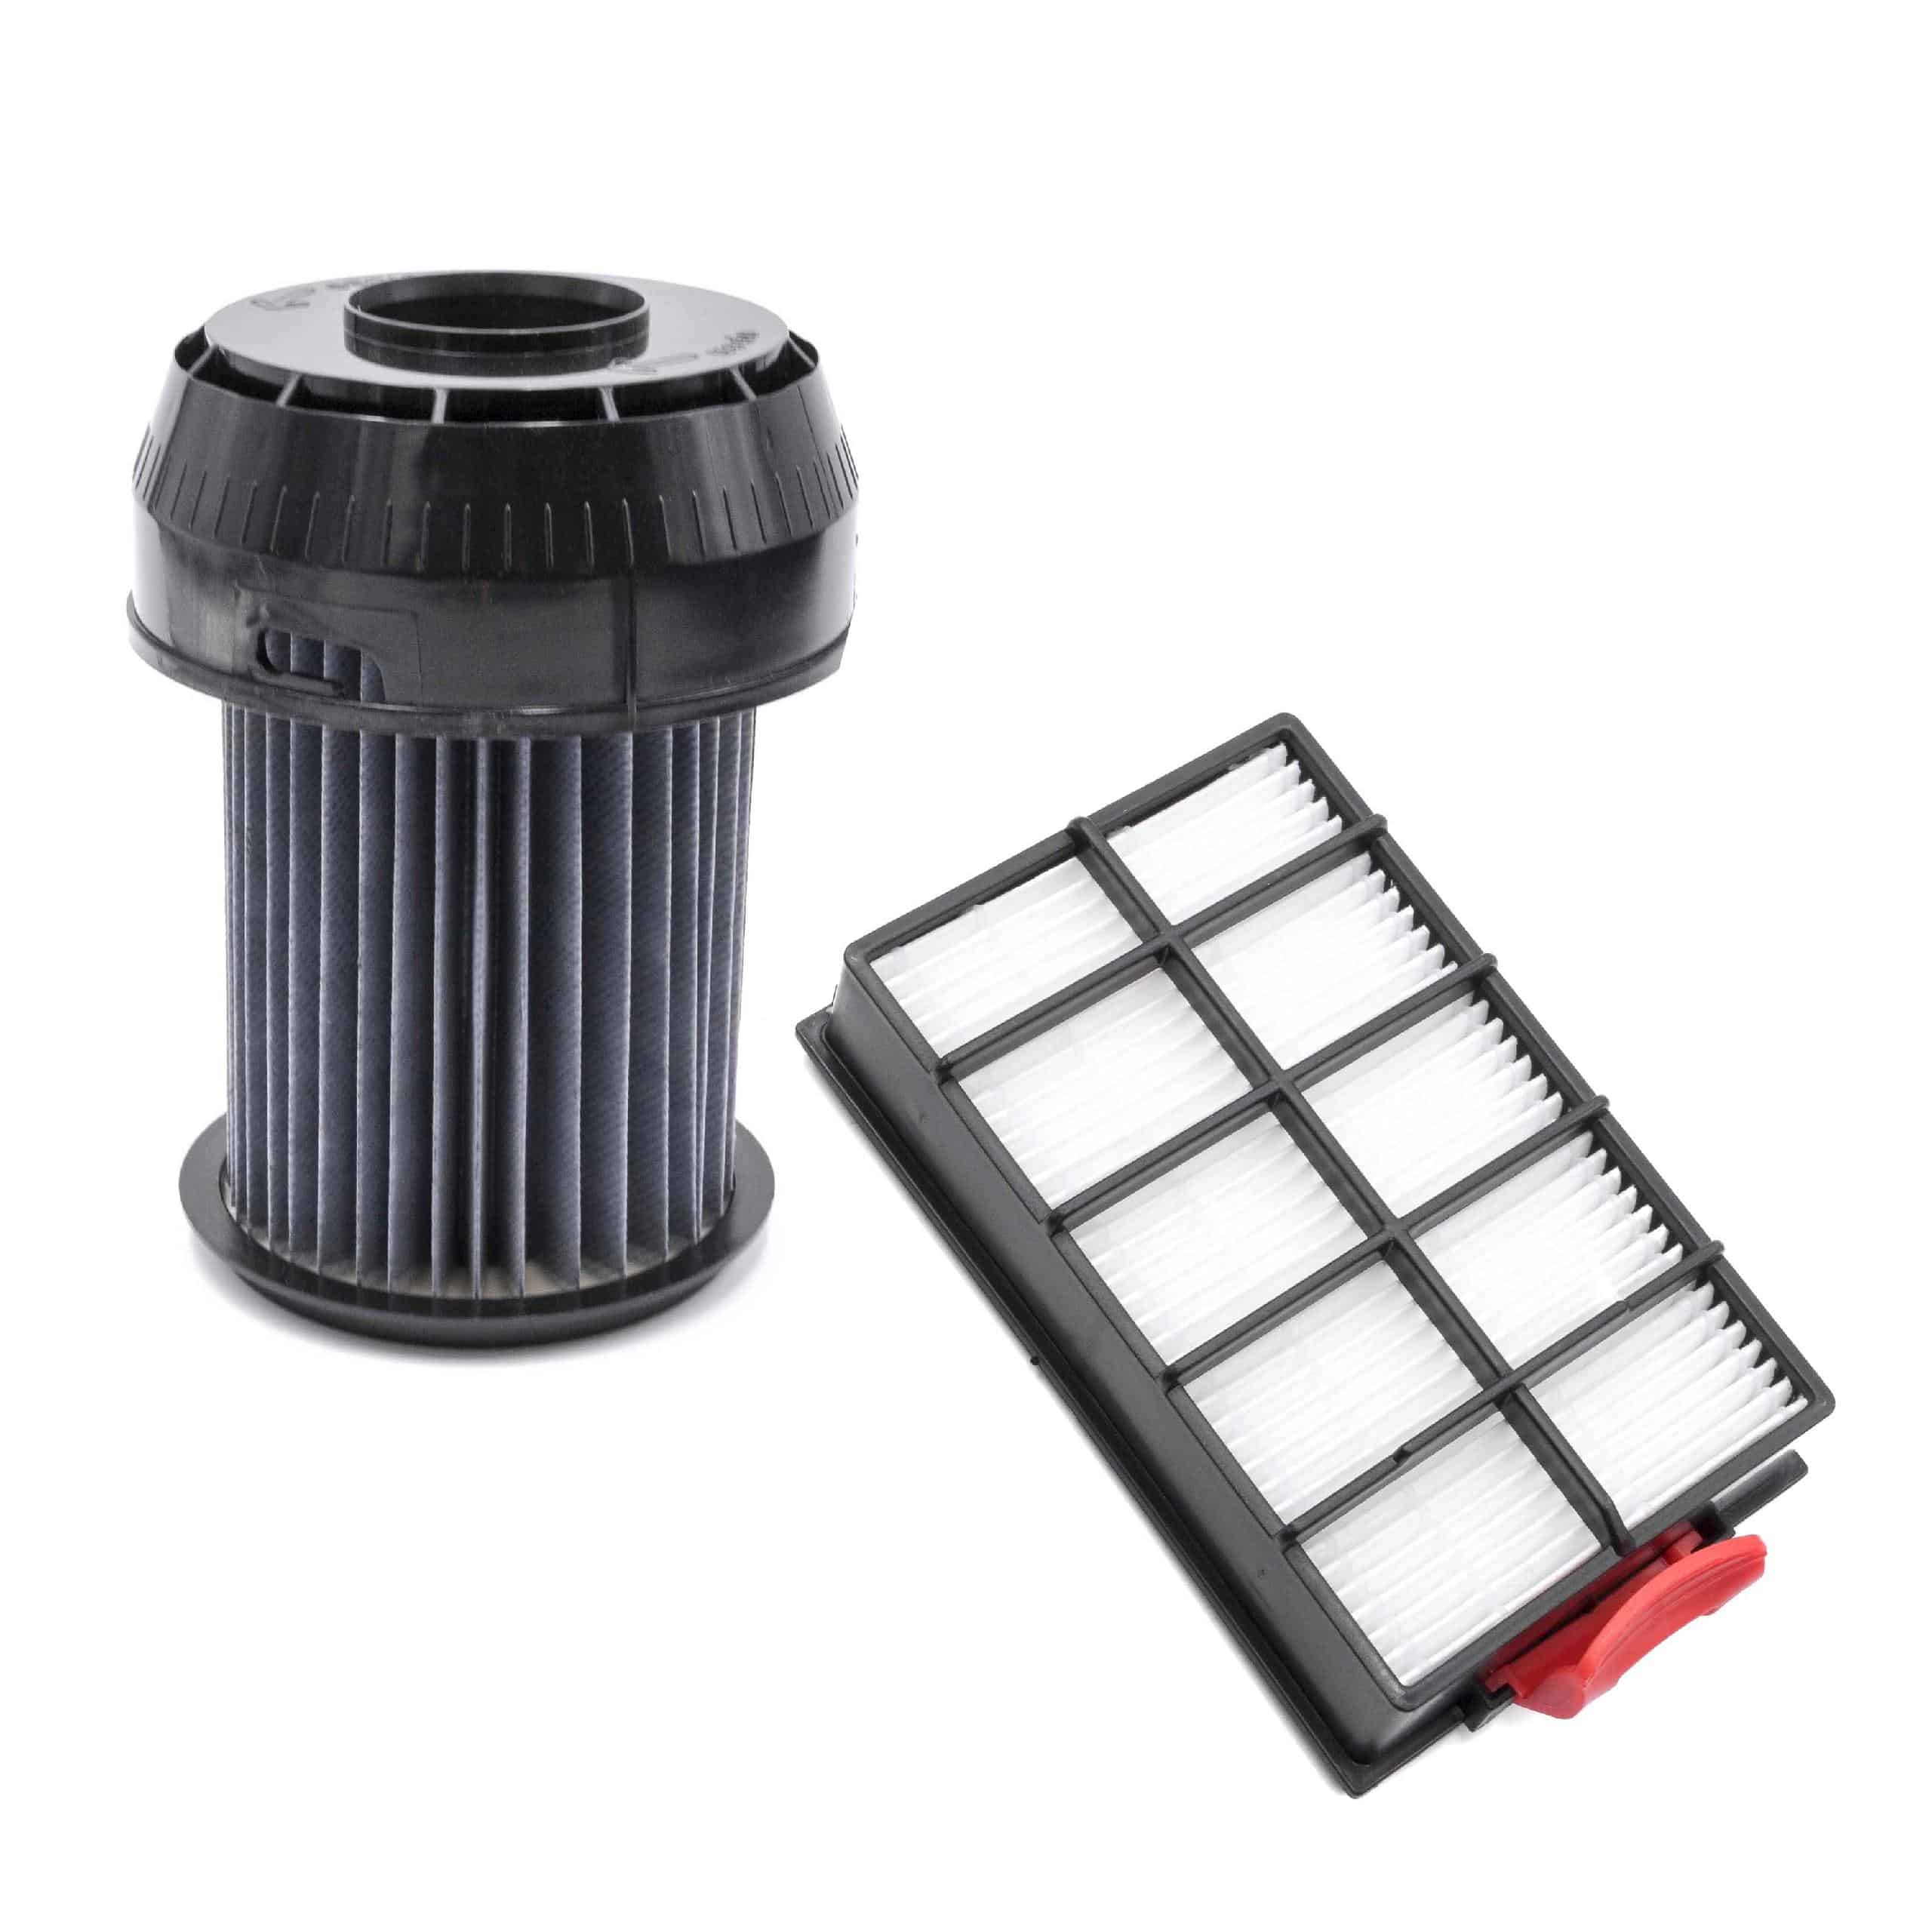 Filter Set replaces Bosch 2609256d46, 00570324, 00649841 for Bosch Vacuum Cleaner - 2 pcs